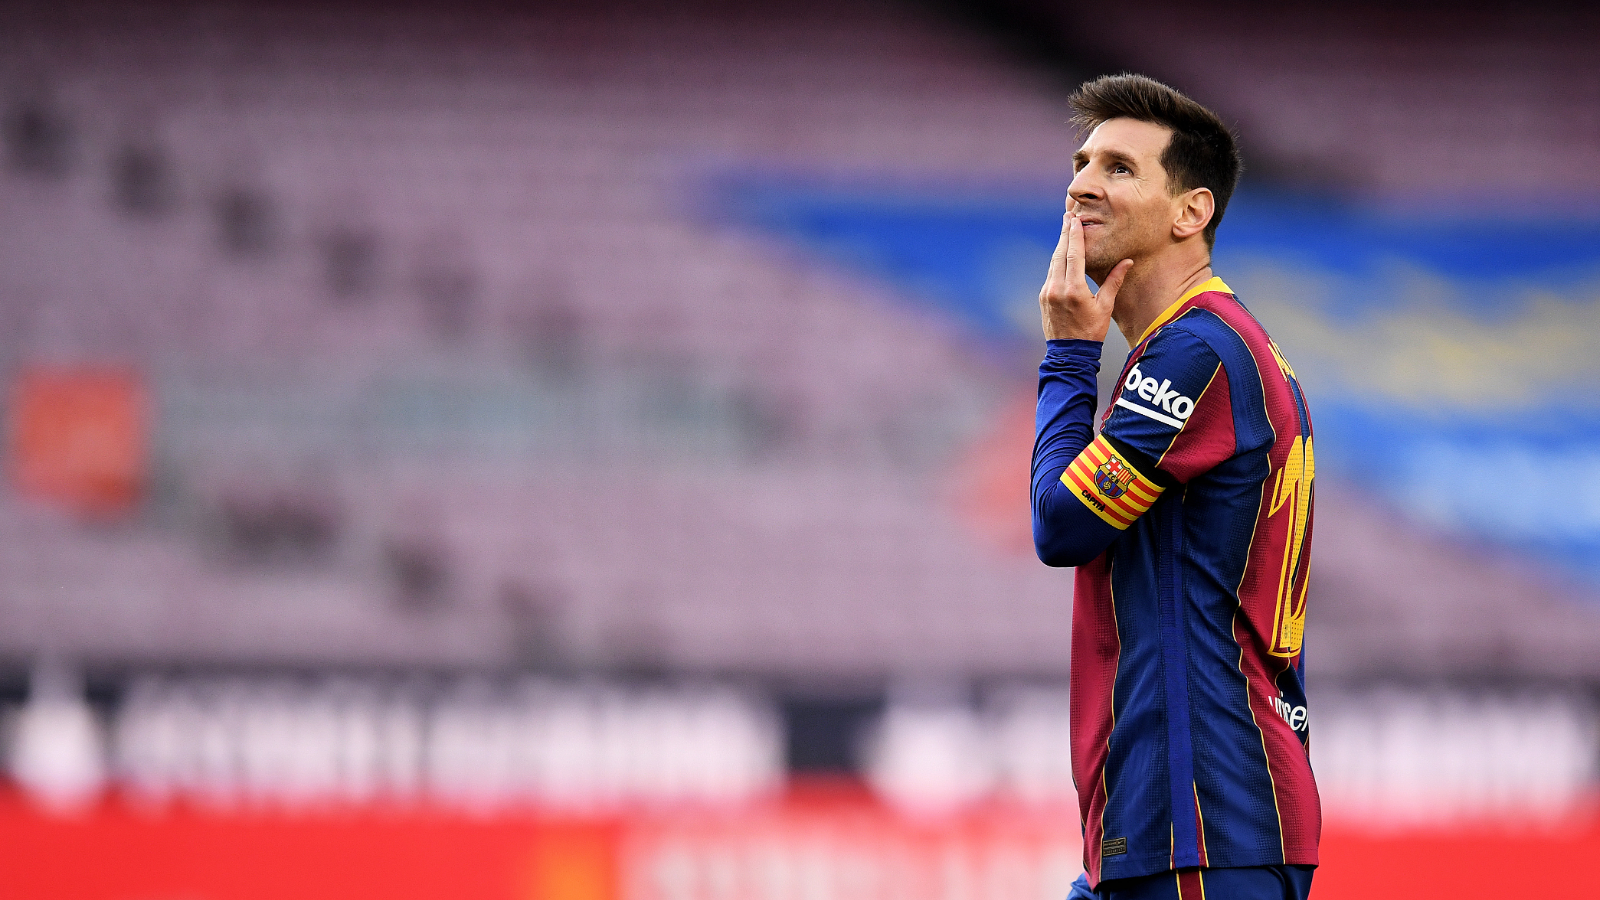 Messi exalta Scola após despedida de ídolo do basquete: 'Referência